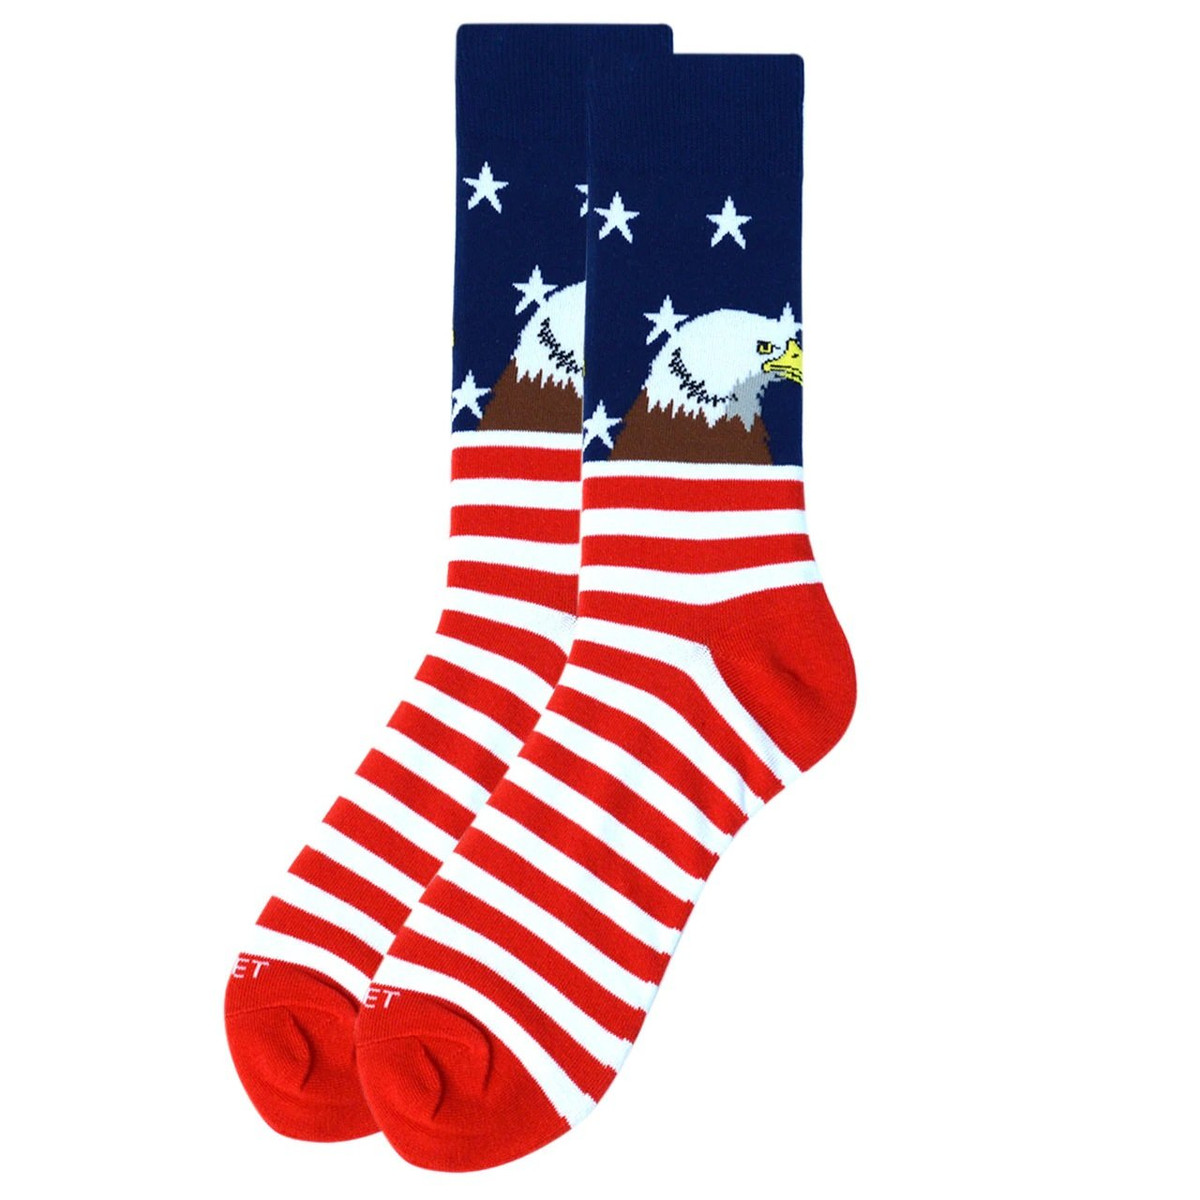 Pair of Men's Bald Eagle American Flag Premium Crew Novelty Socks